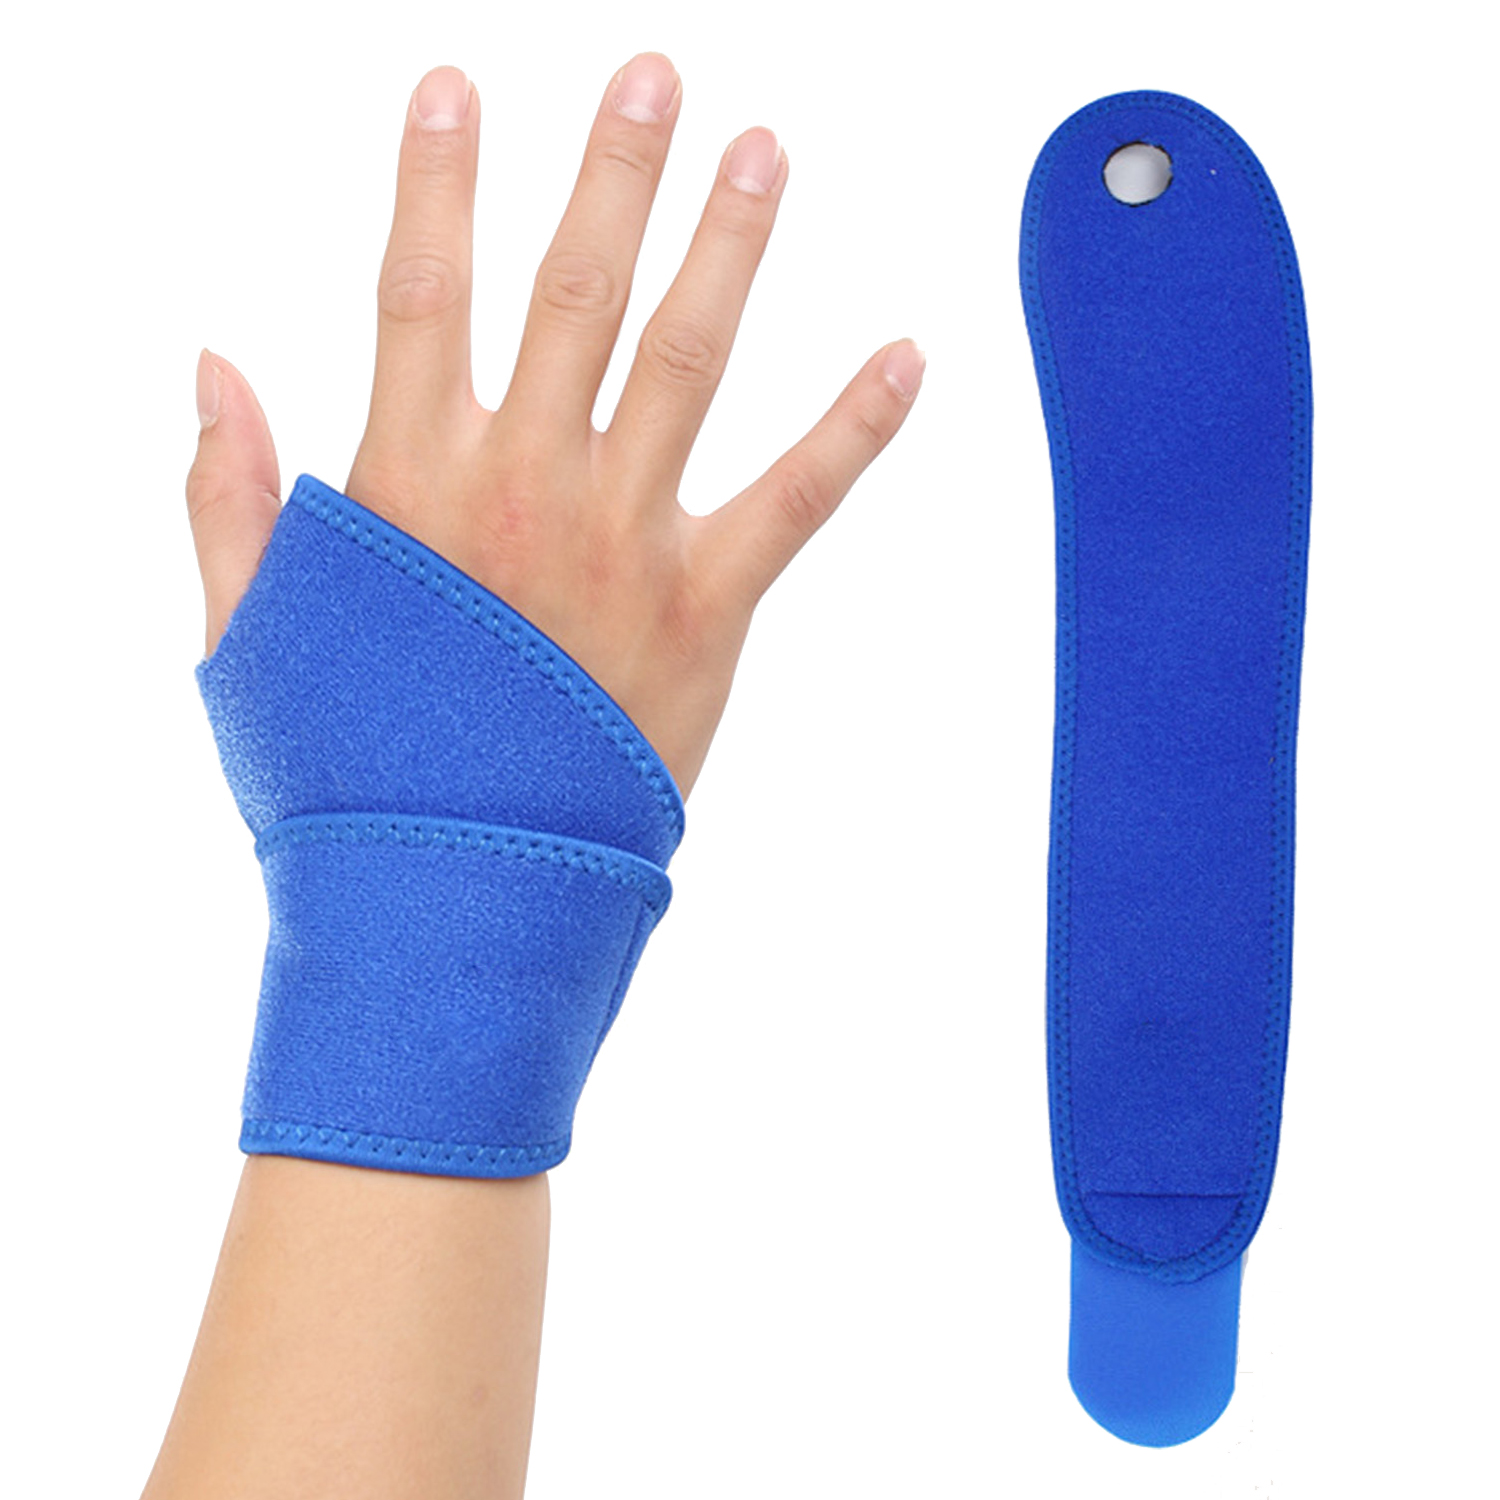 Professional Adjustable Wrist Straps Gym Fitness Wrist Wraps With Thumb Hole